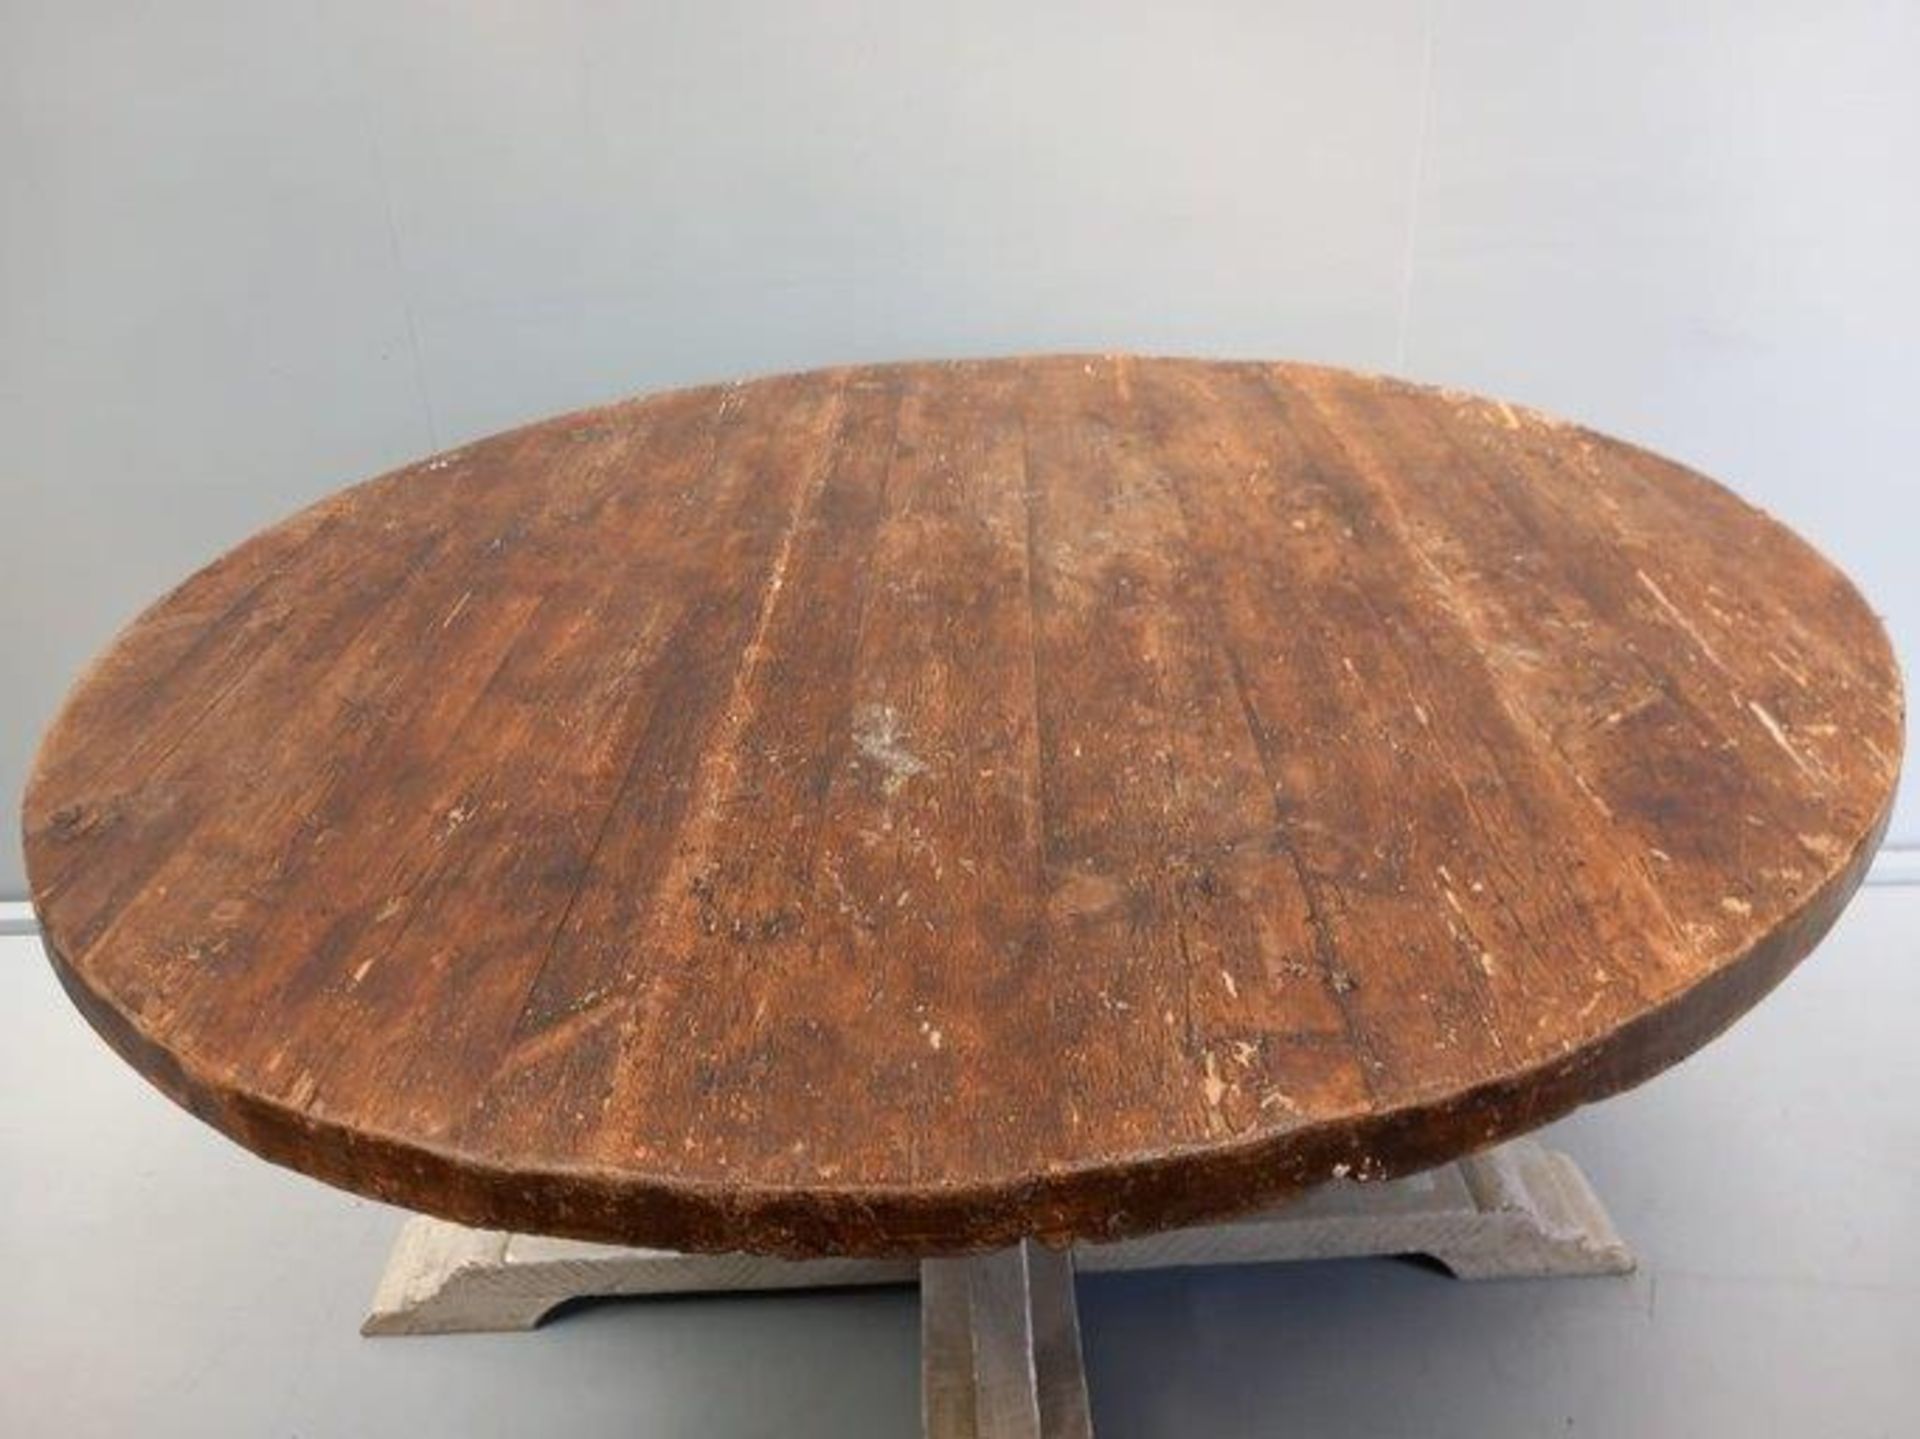 Painted Pine Round Kitchen Table H78cm x L137cm x W134cm - Image 2 of 2